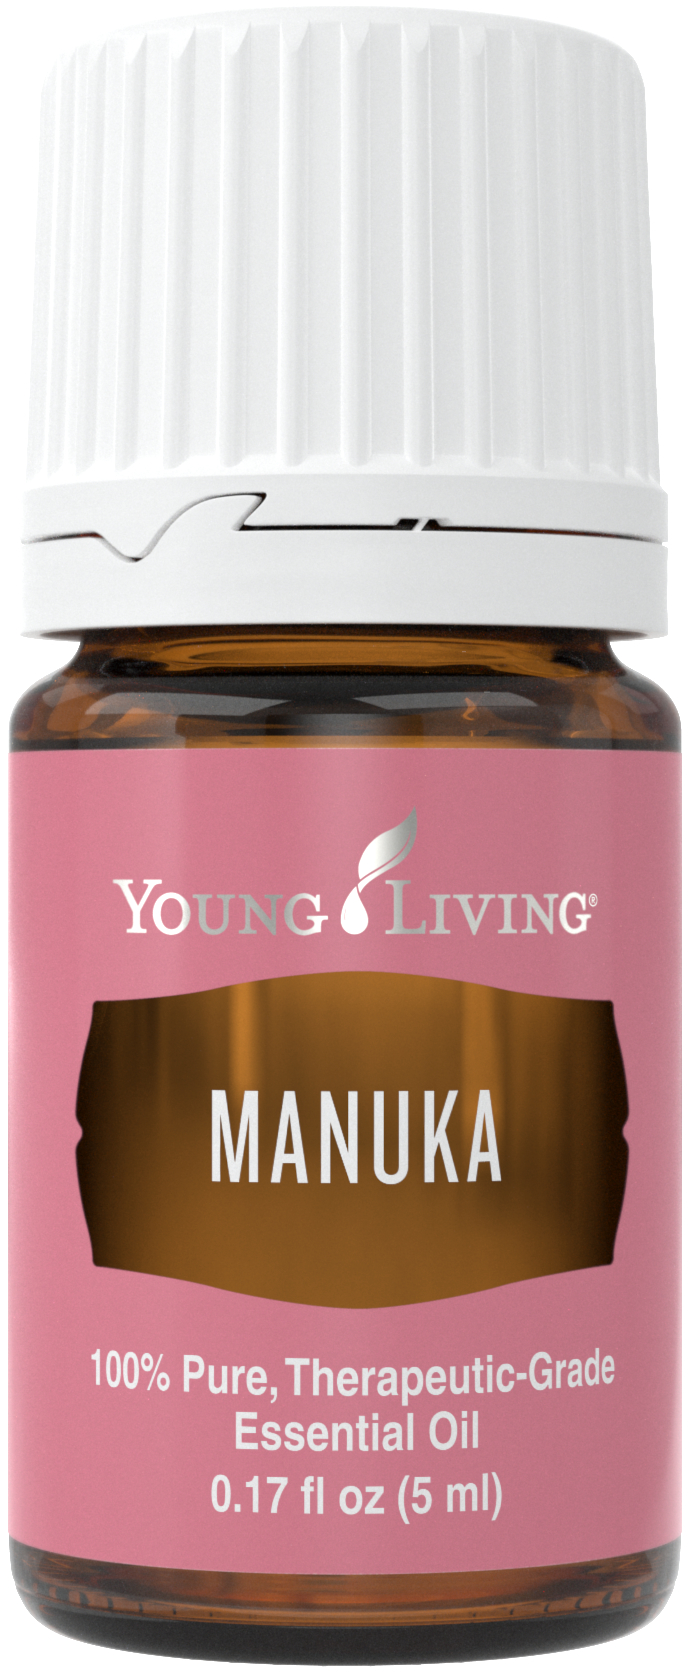 Manuka essential oil 